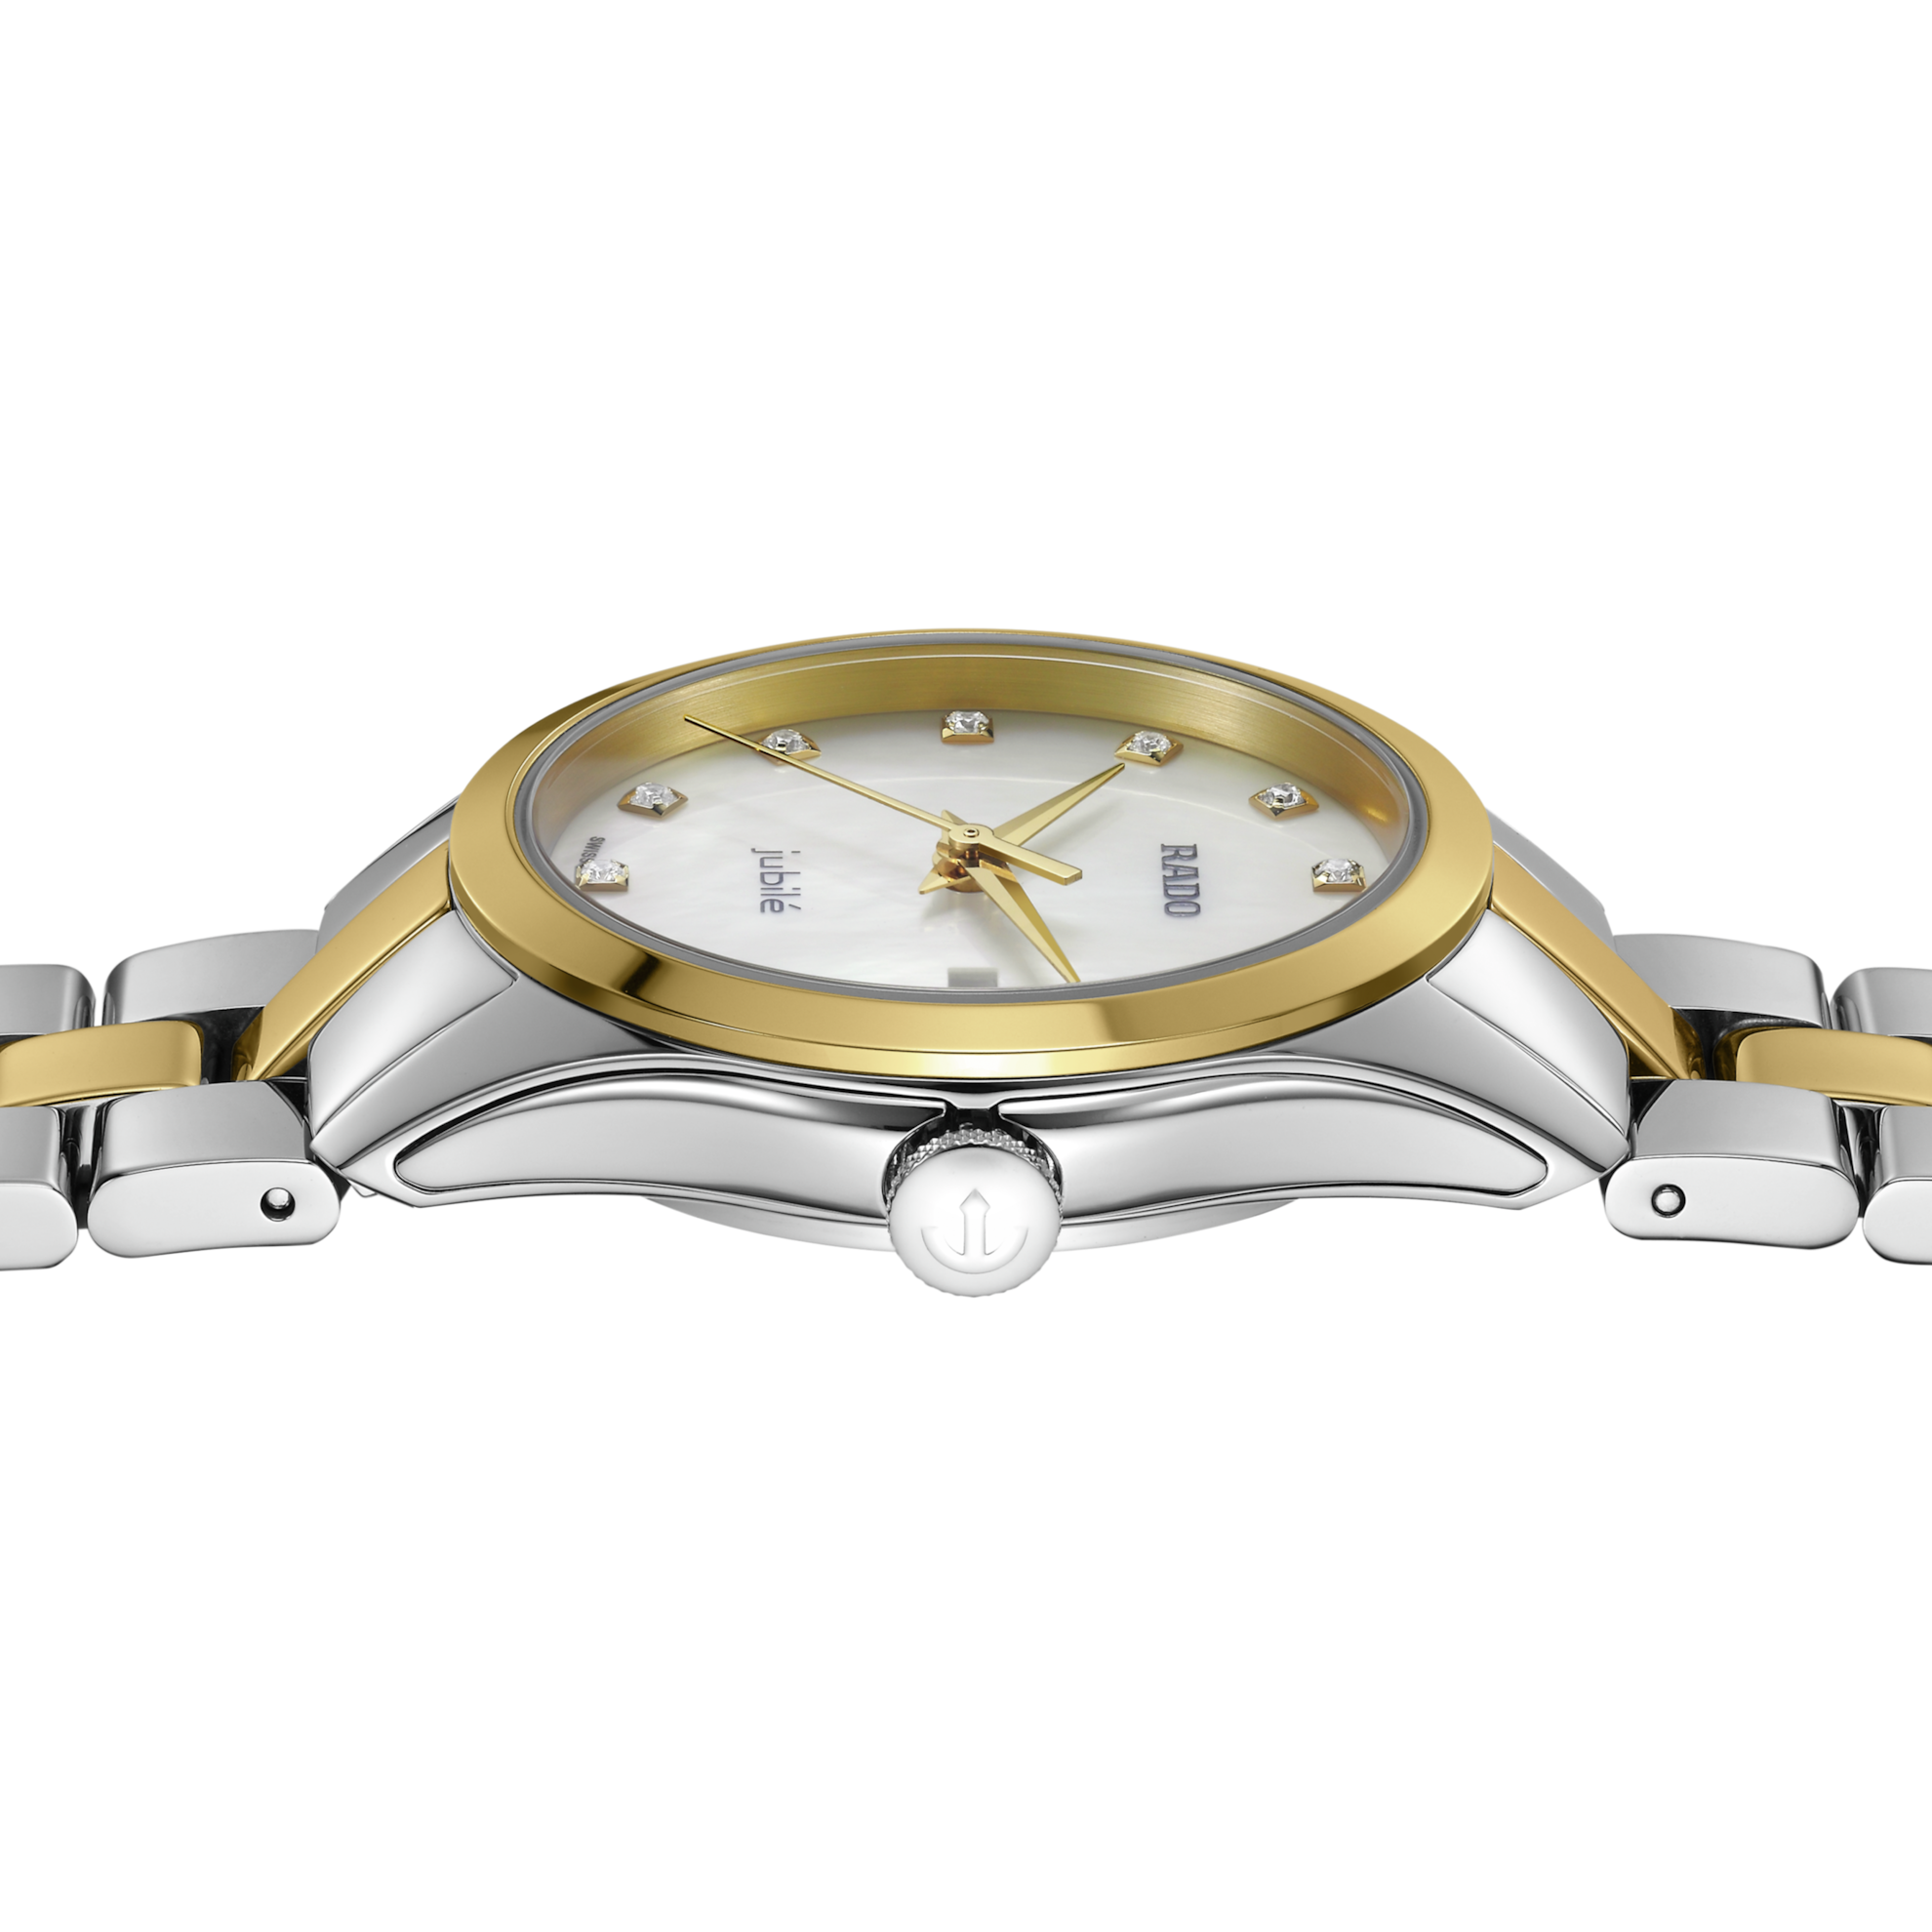 HyperChrome R32975912 - Kamal Watch Company